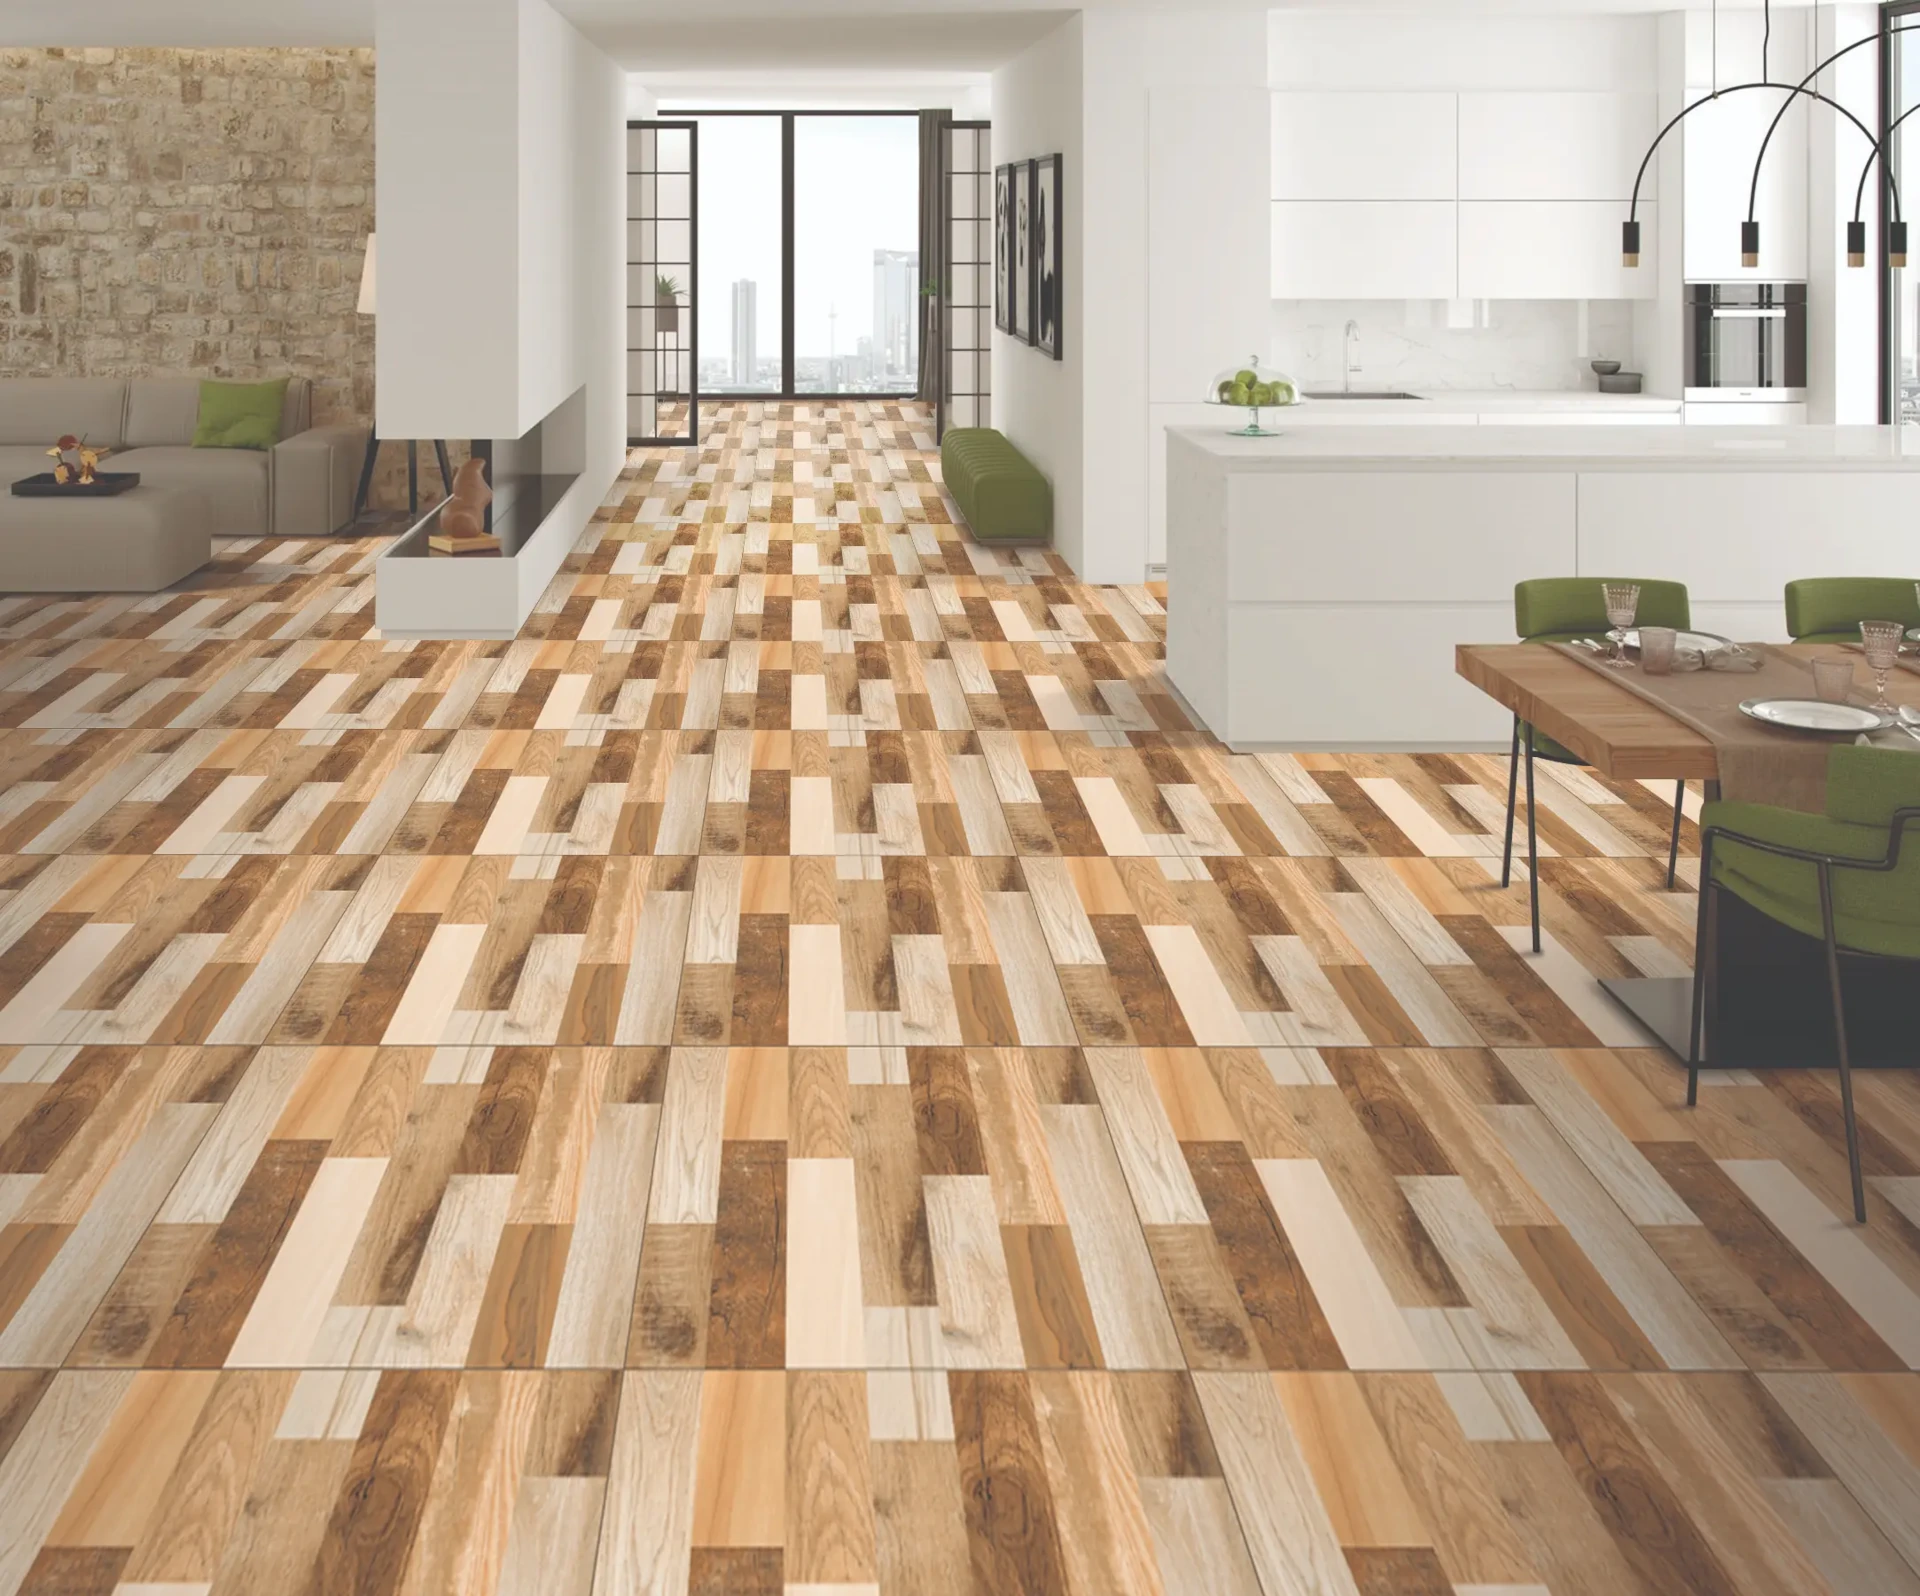 Wooden strip tiles